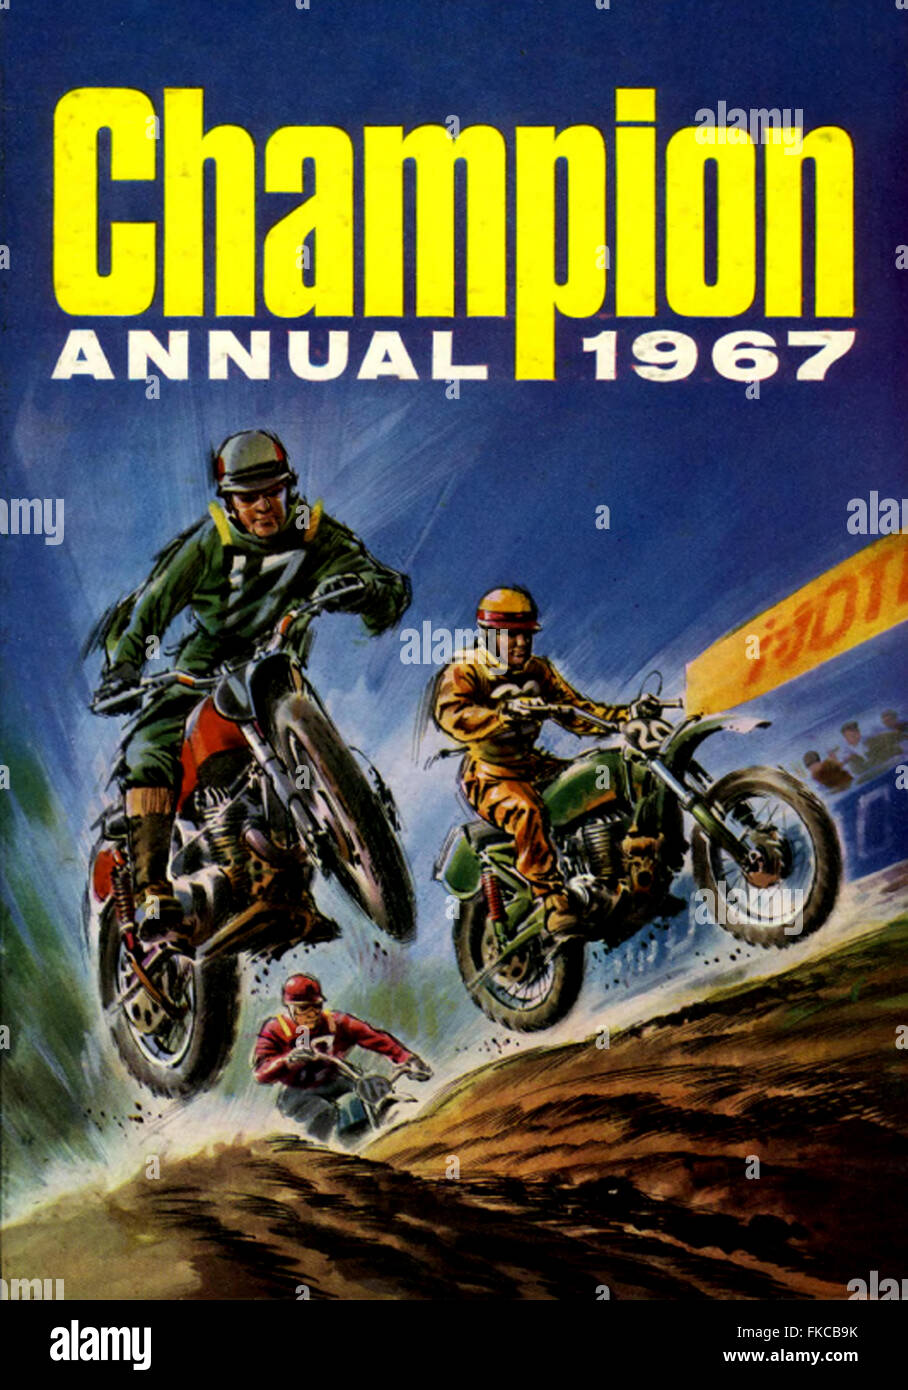 1960s UK Champion Magazine Cover Stock Photo - Alamy